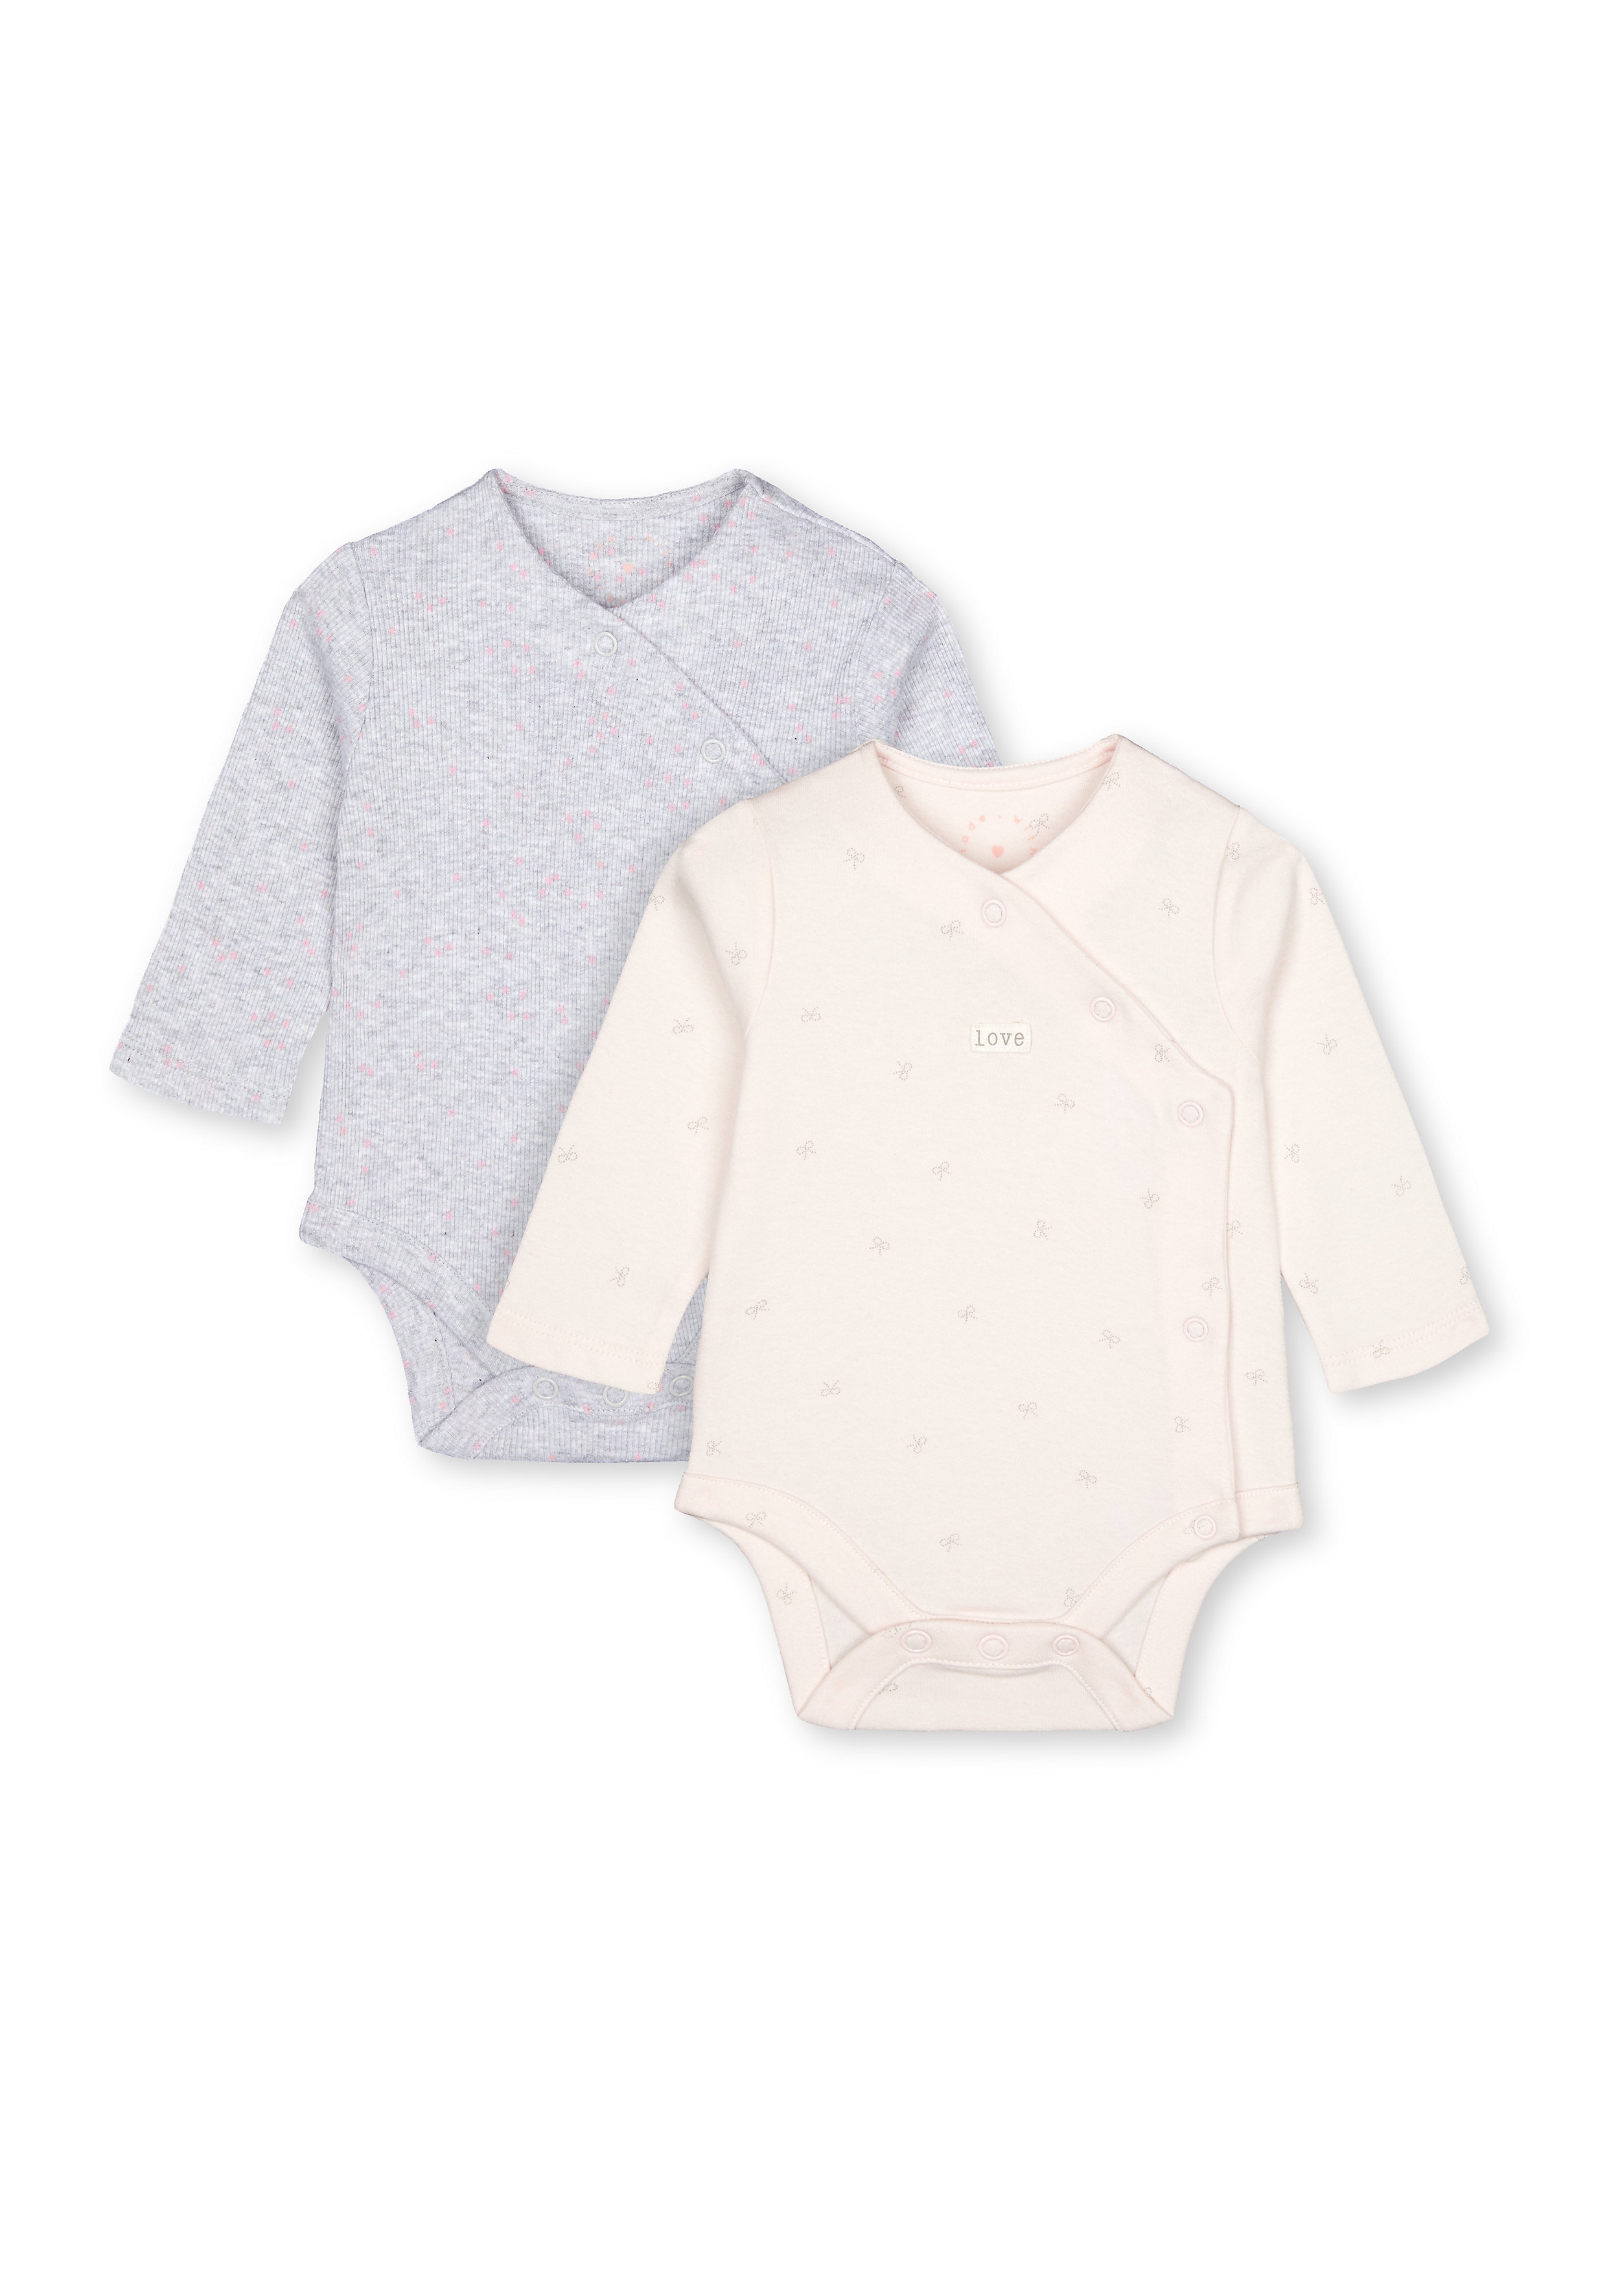 Mothercare | Girls Full Sleeves Printed Bodysuit - Pack Of 2 - Pink Grey